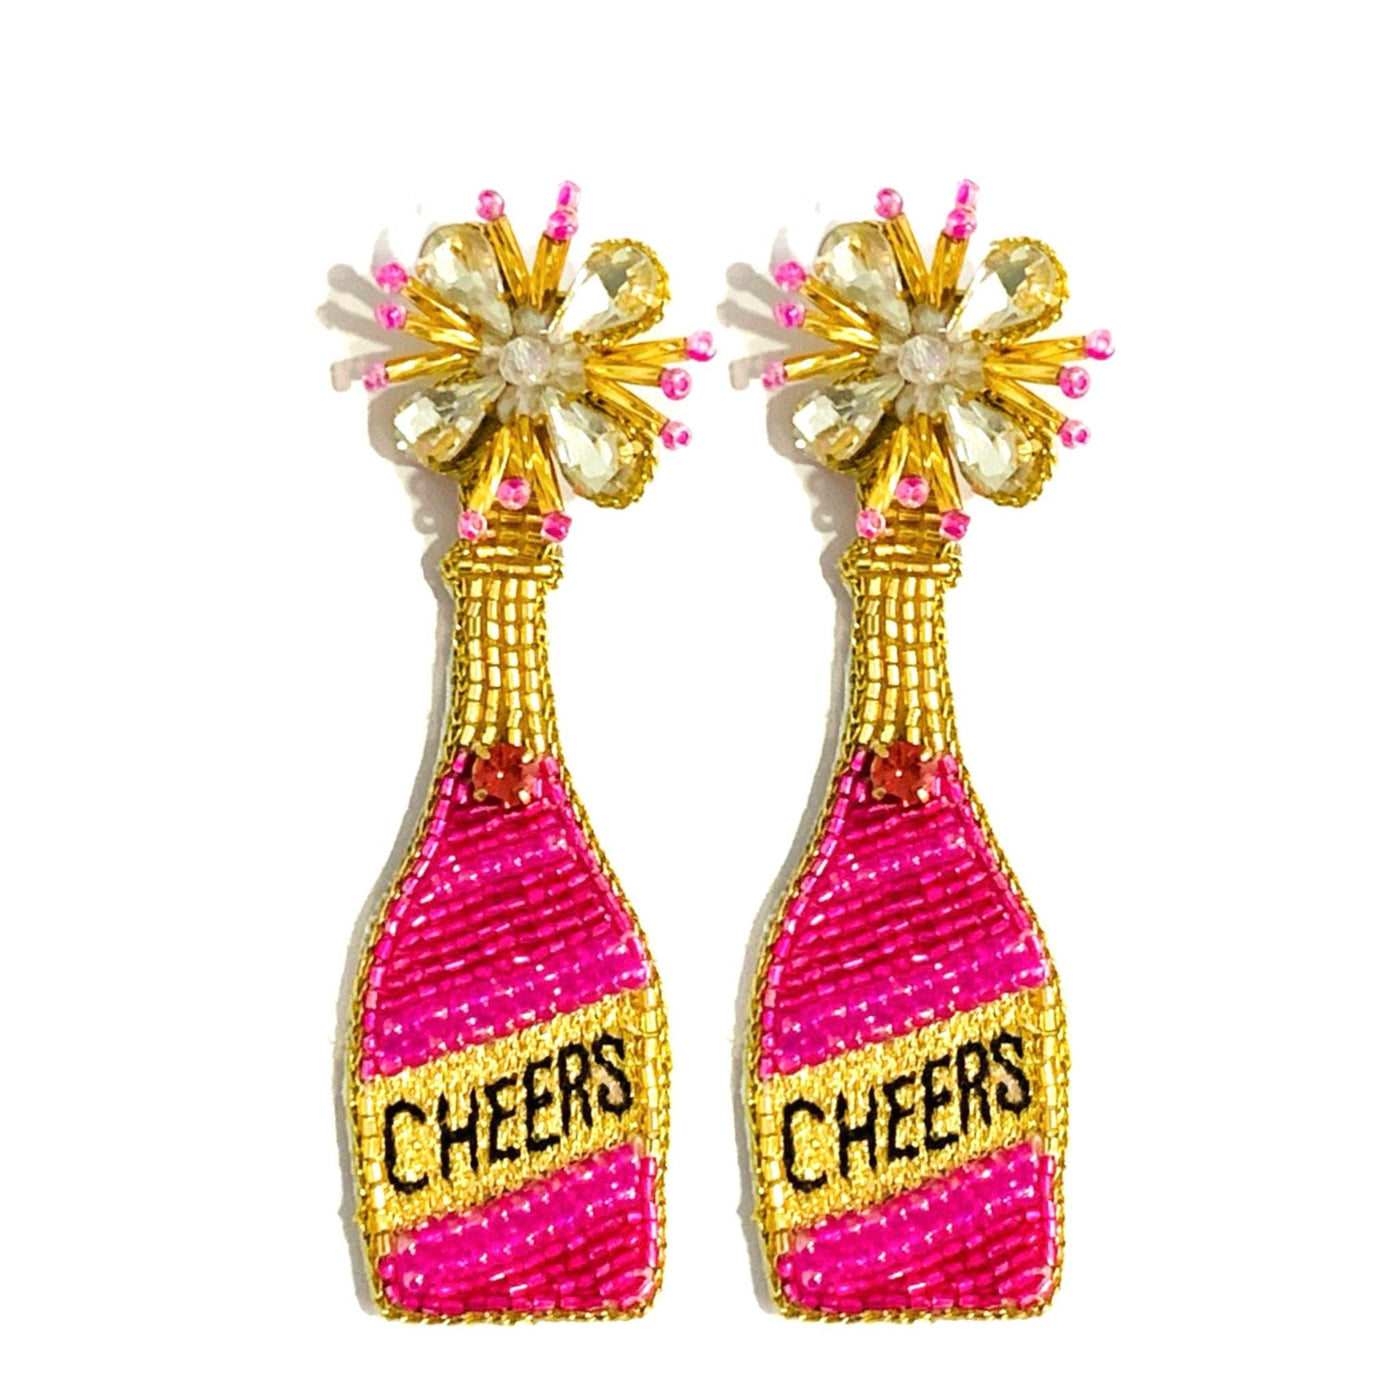 WS Champagne Bottle Earrings - Cheers